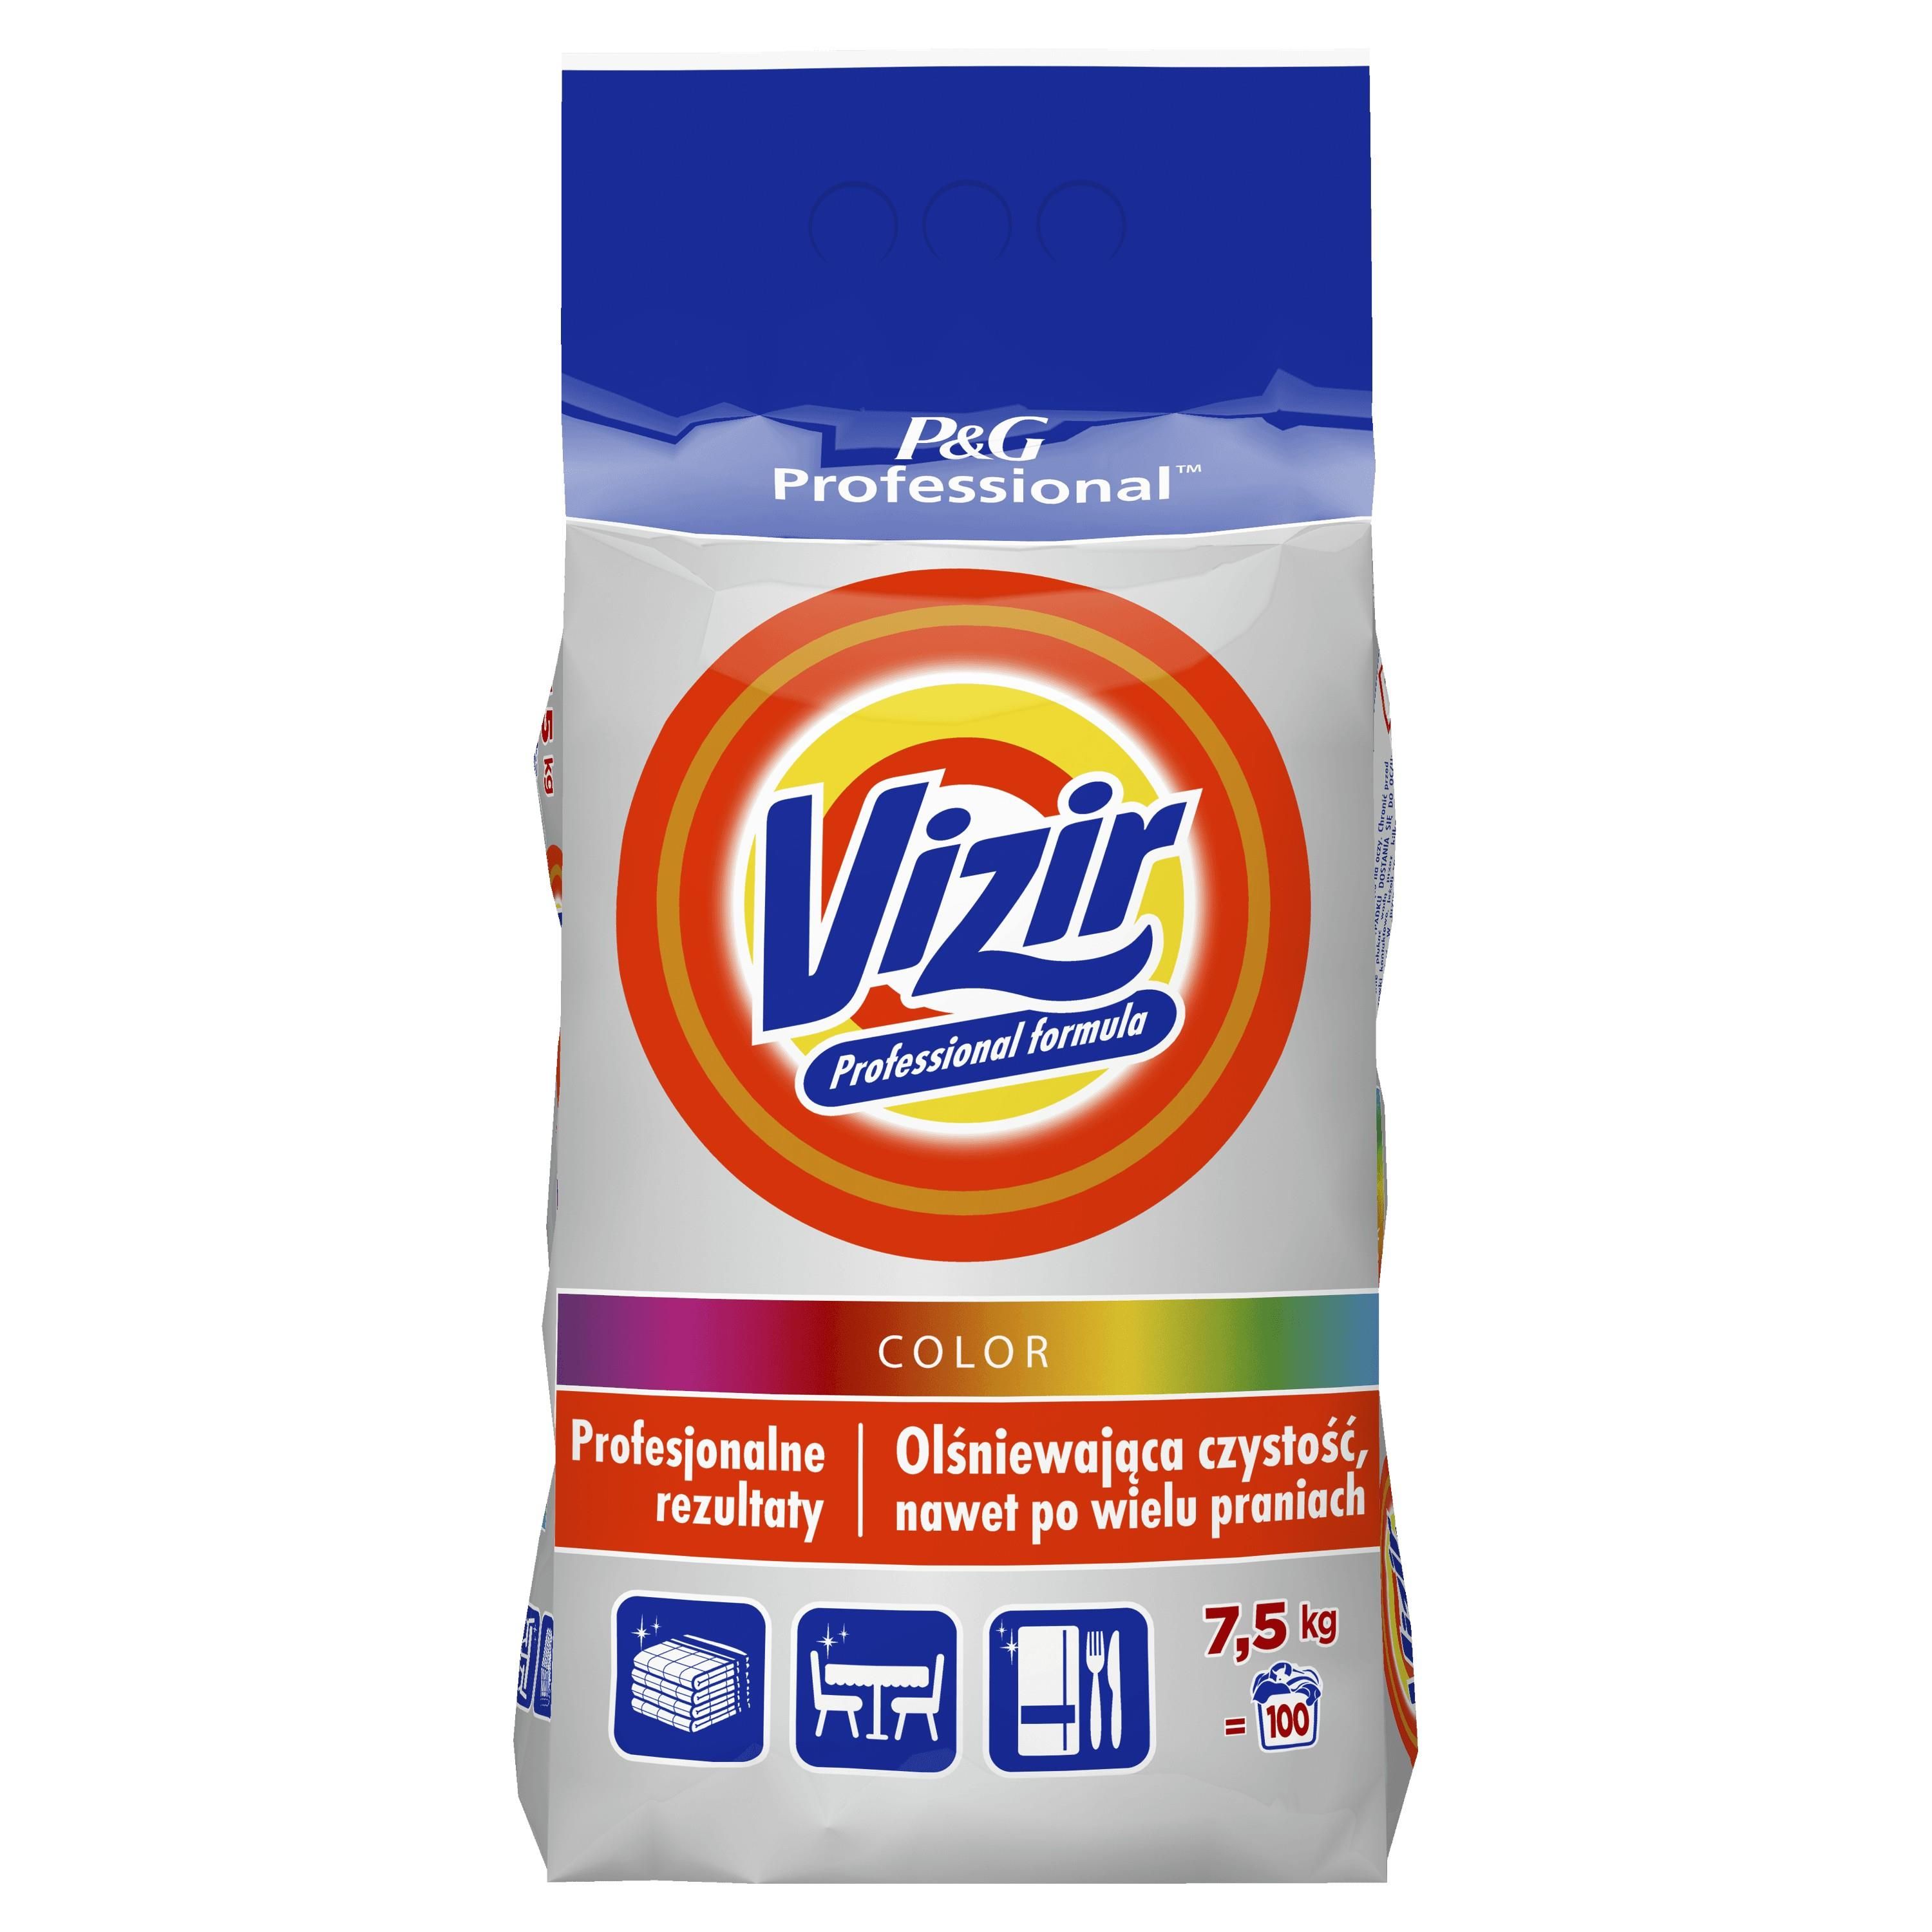 Washing powder VIZIR Professional Color 7,5 kg